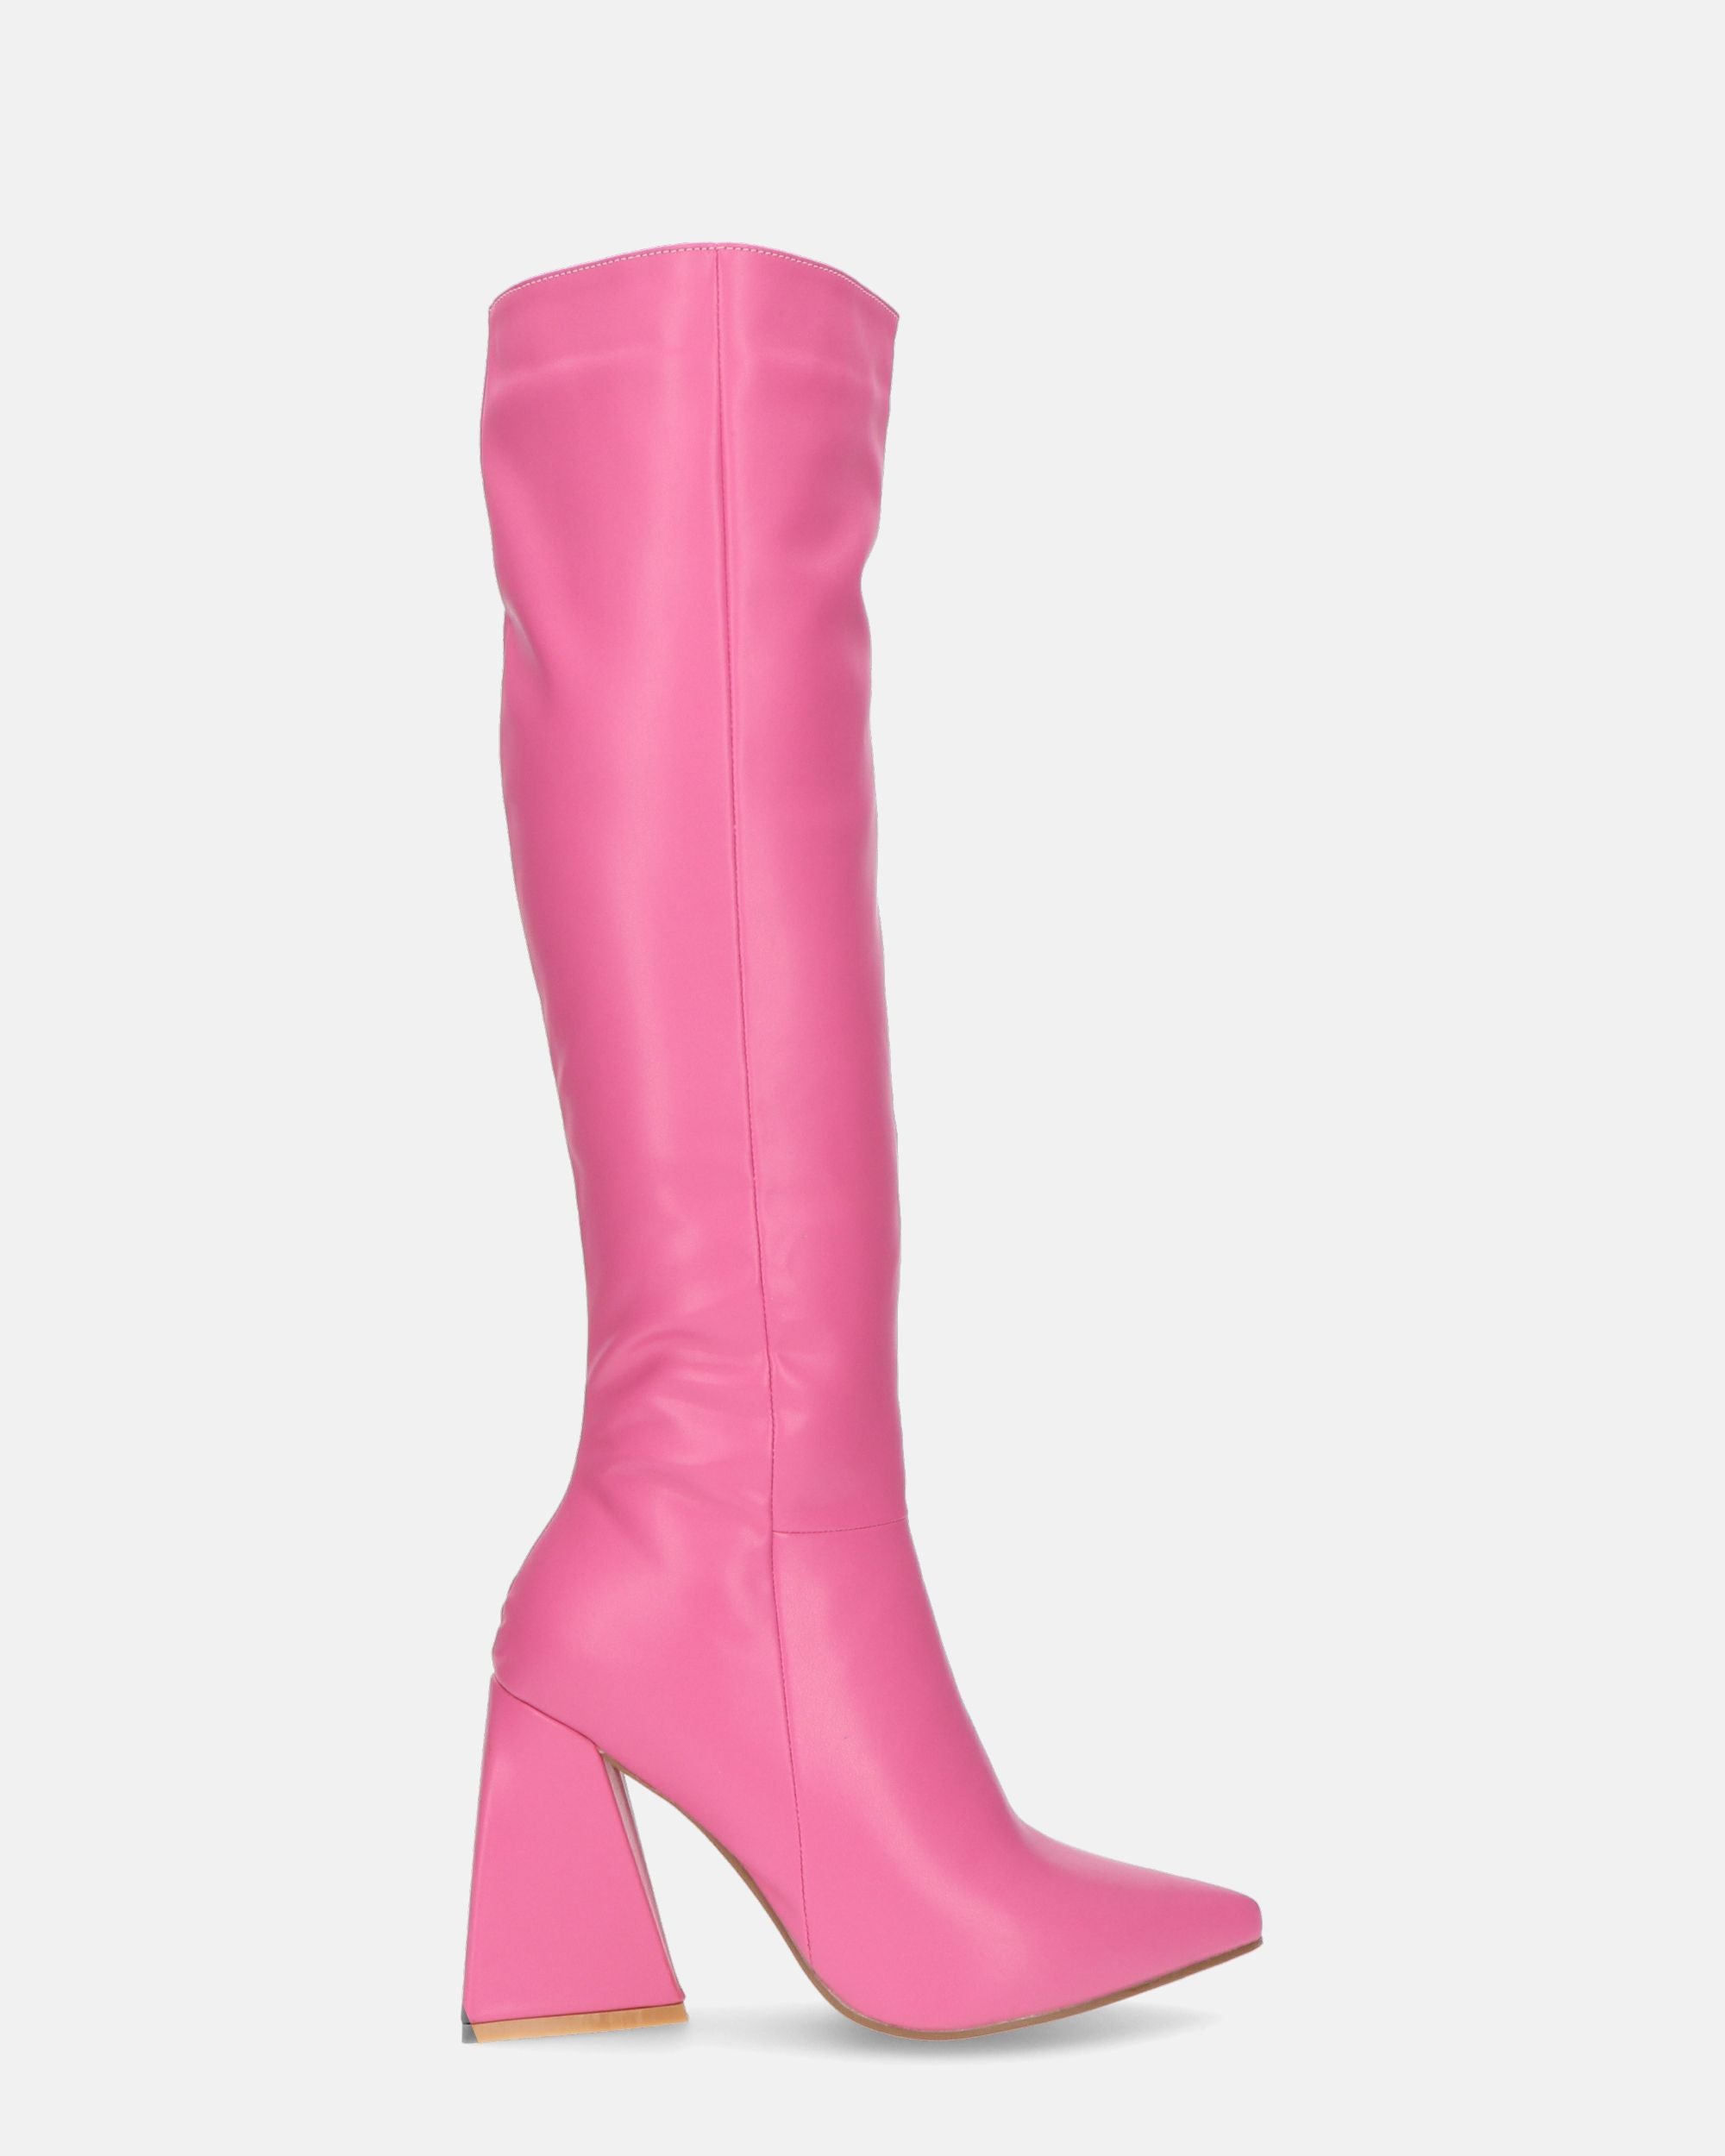 TRUDY - high-heeled boots in fuchsia PU